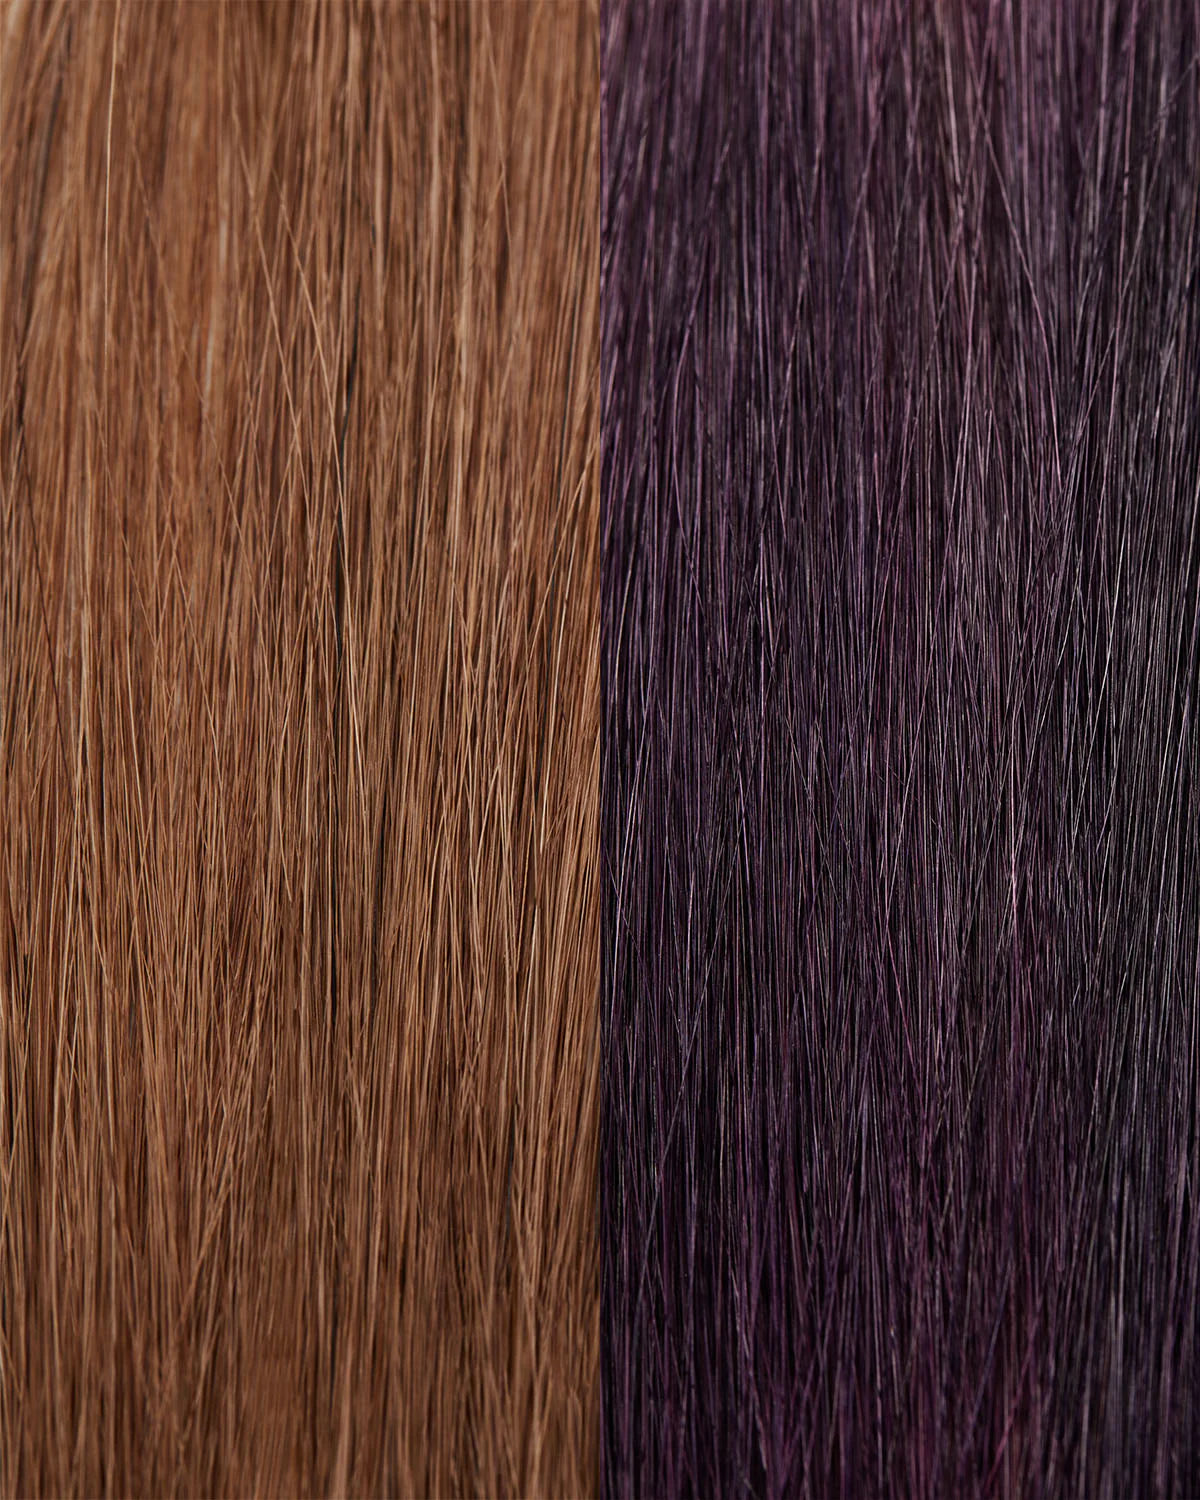 Maria Nila Colour Refresh Vivid Violet 0.22